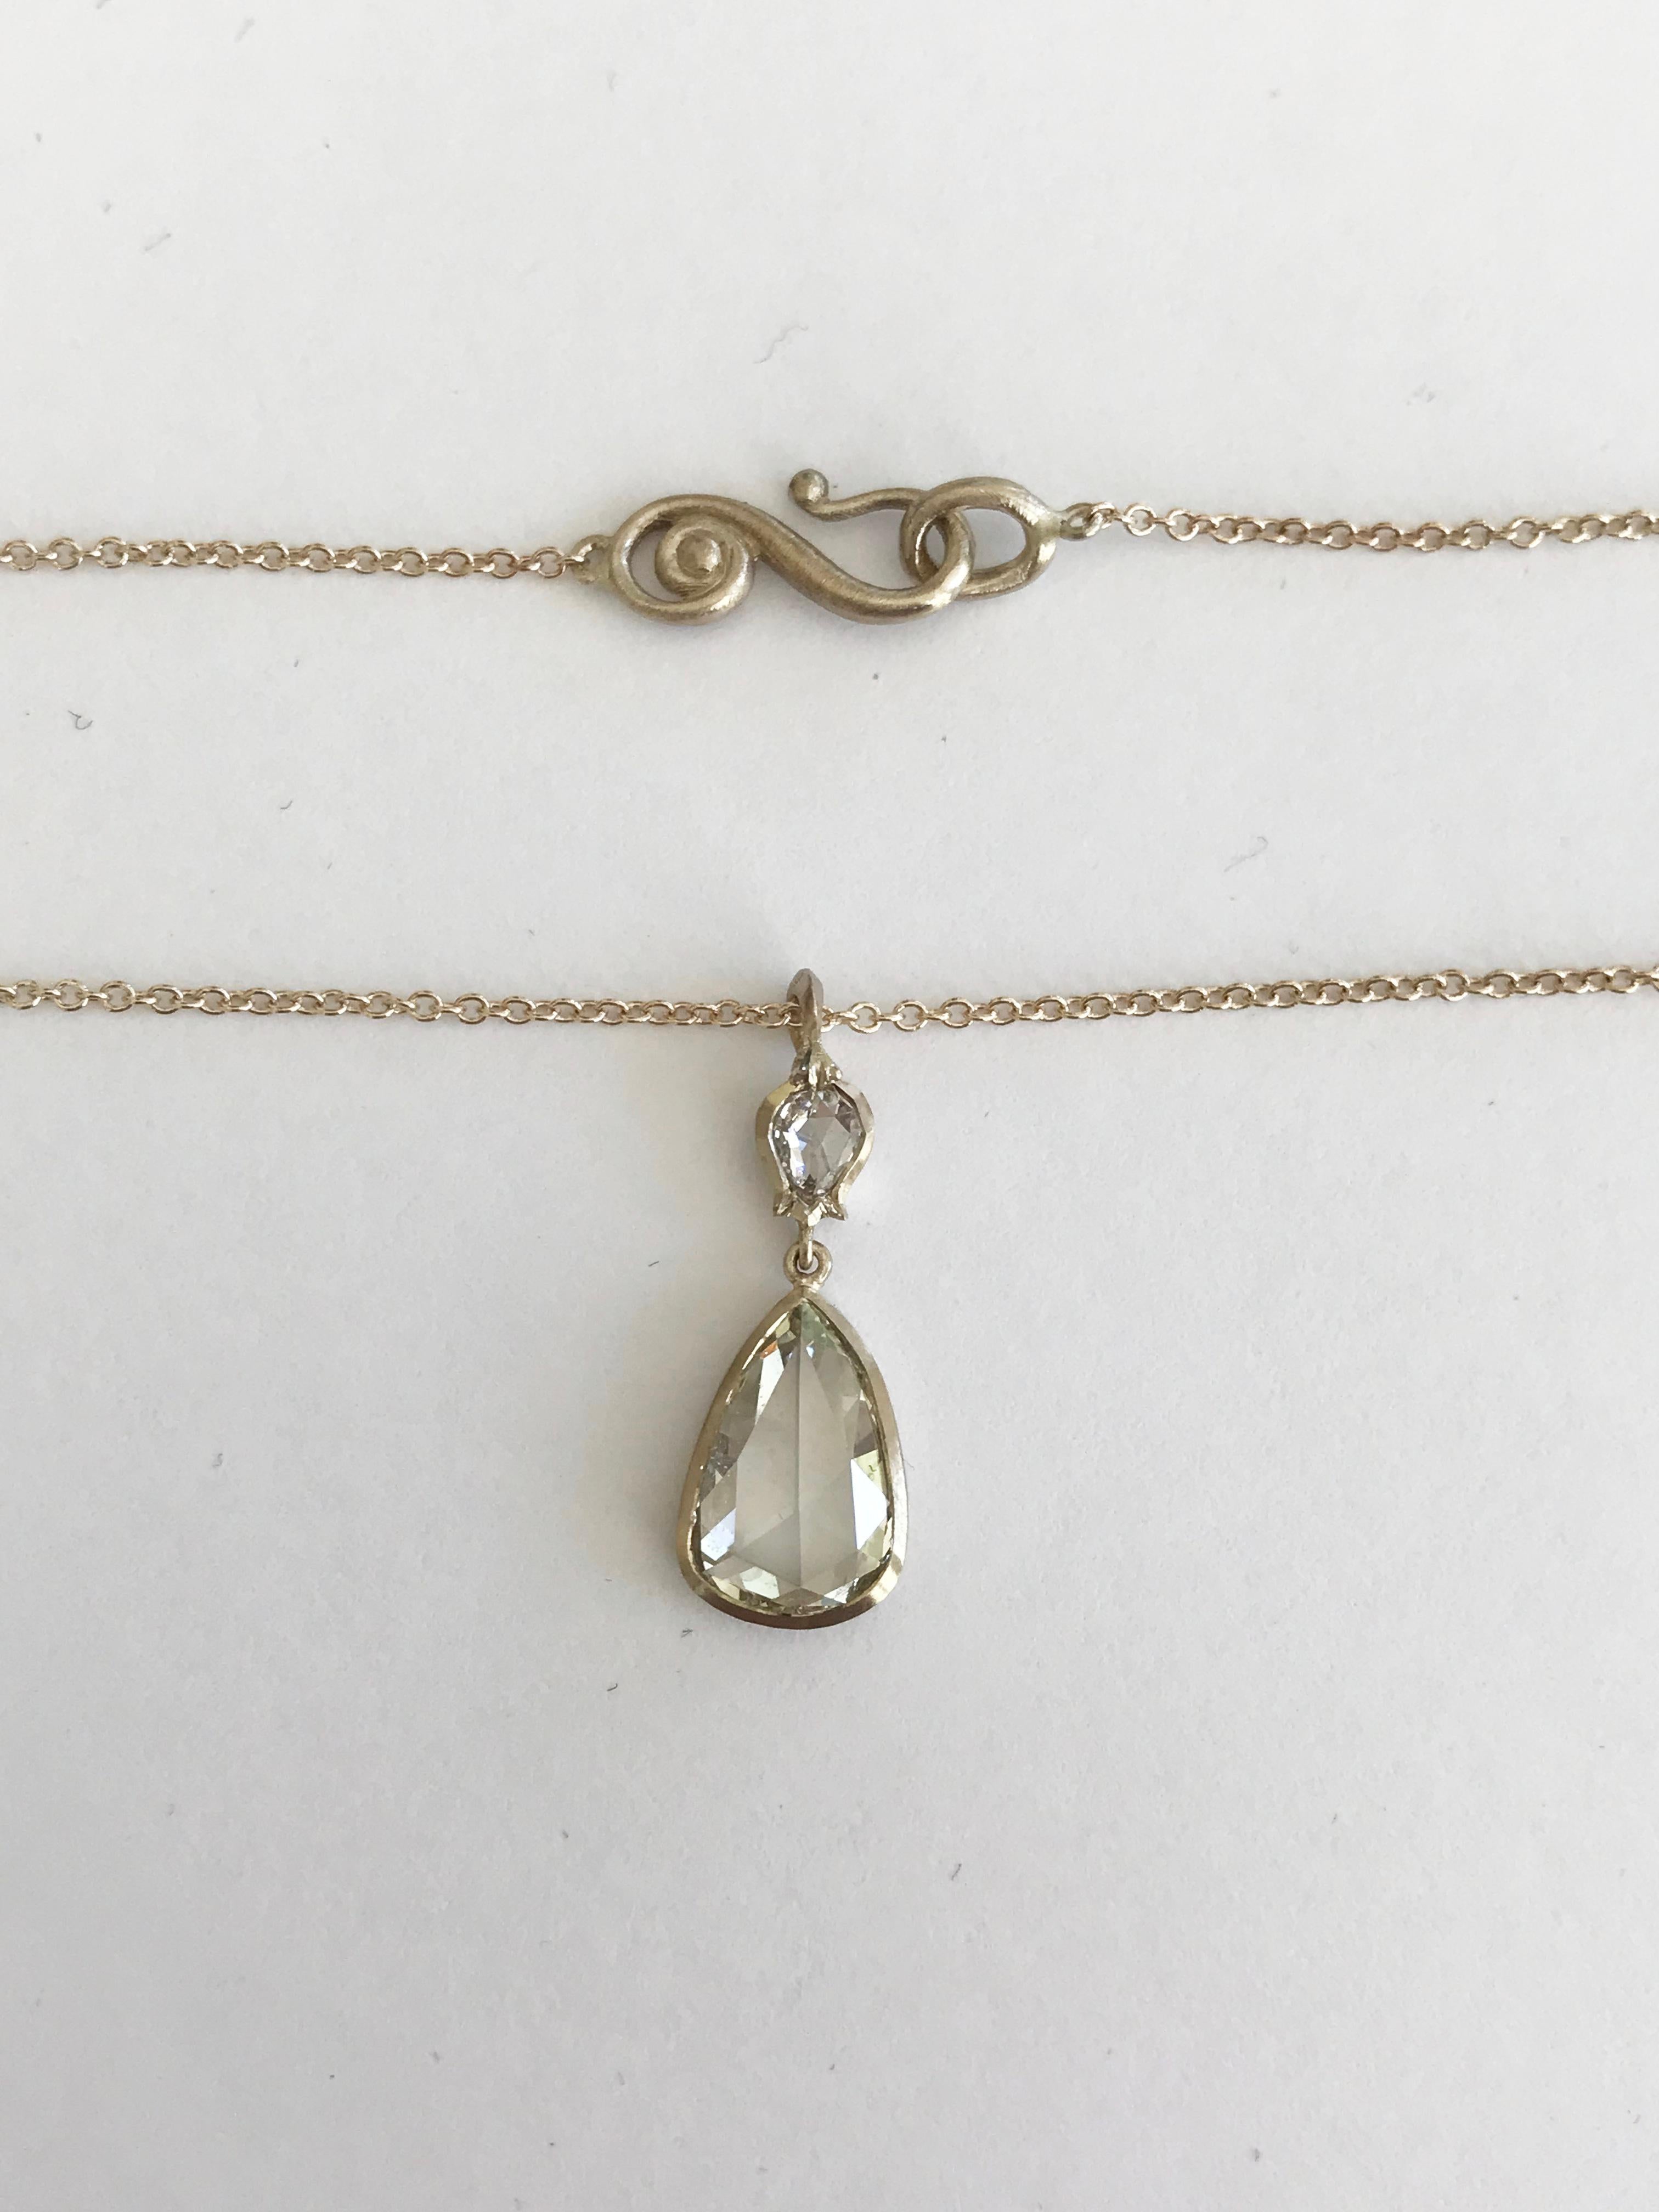 Dalben 1.2 Carat Pear Shape Diamond White Gold Necklace For Sale 8